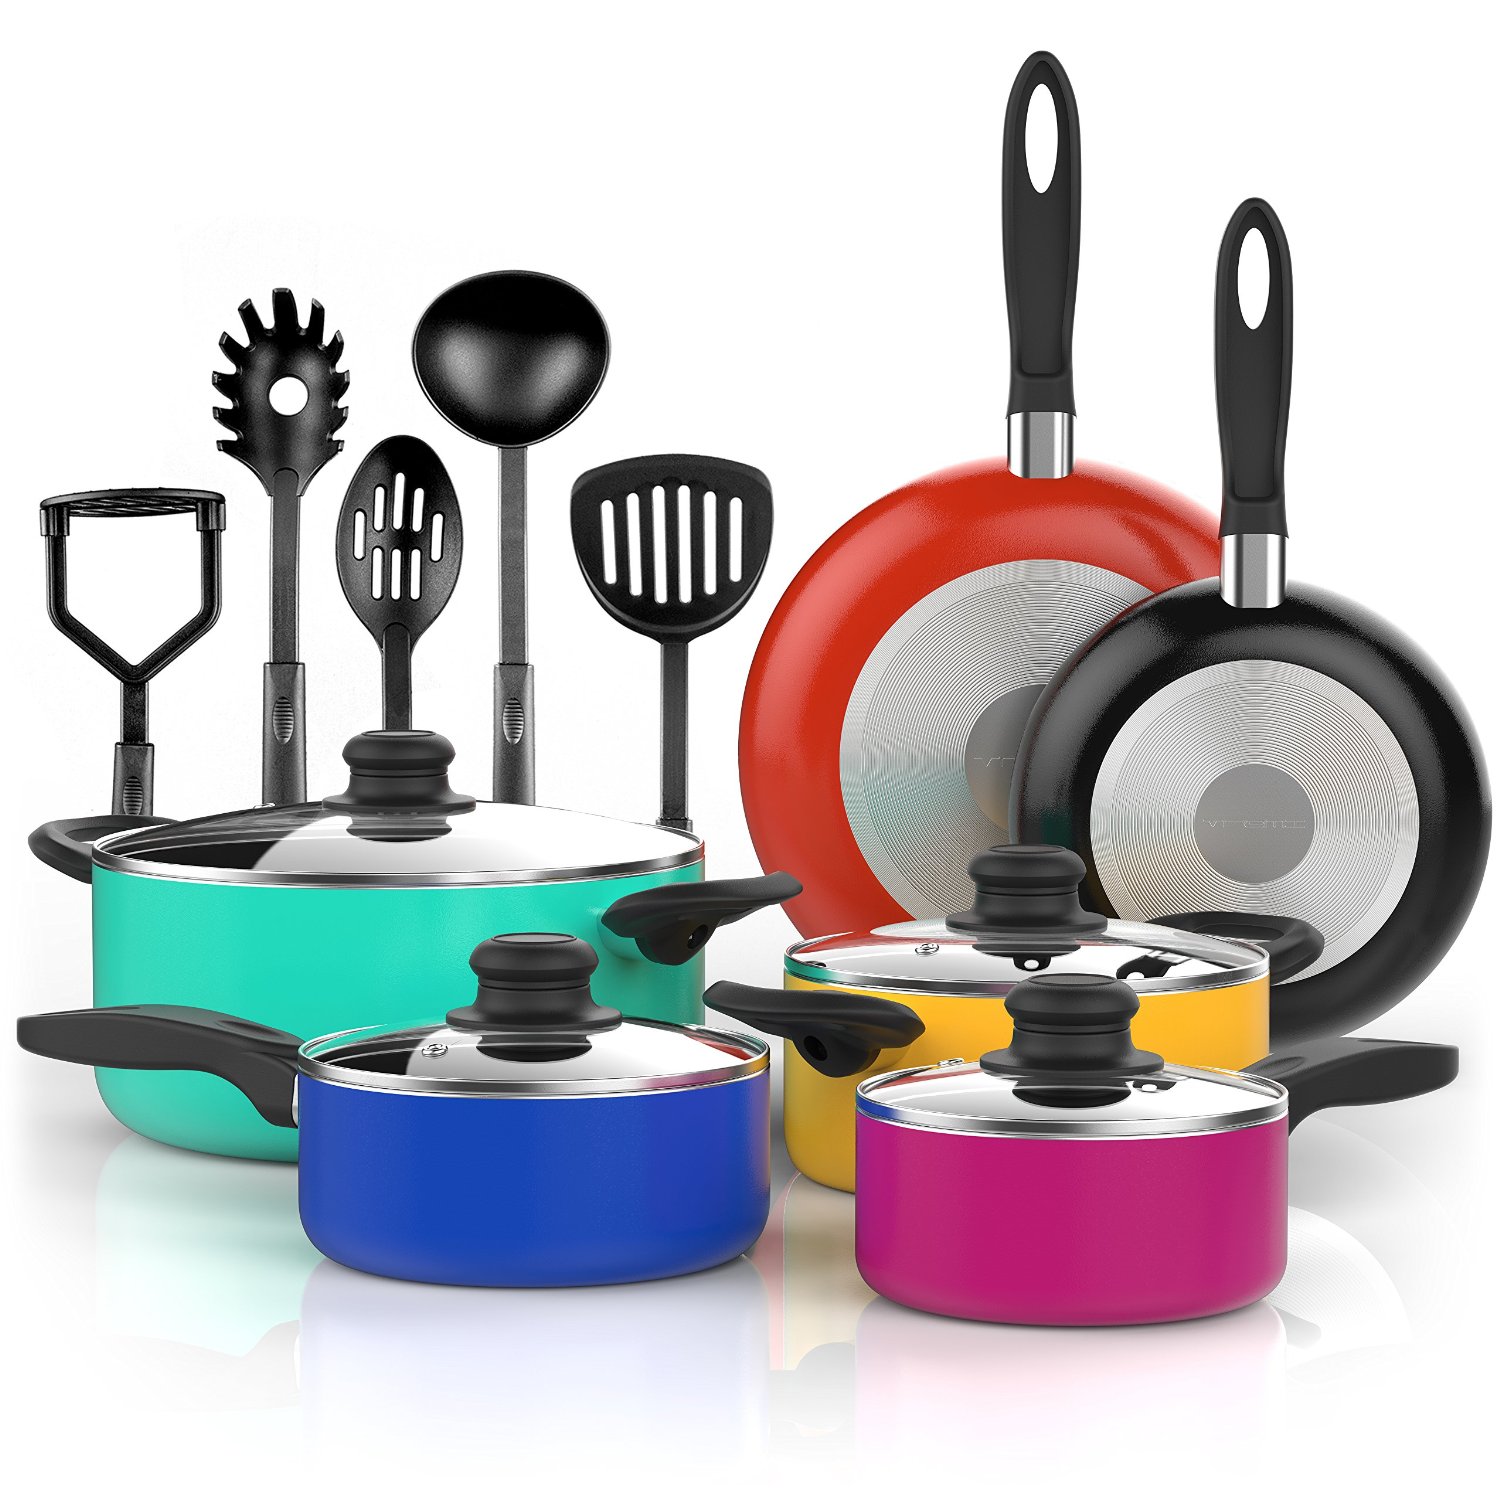 Amazon.com: Cookware Sets: Home & Kitchen: Nonstick Cookware Sets ...